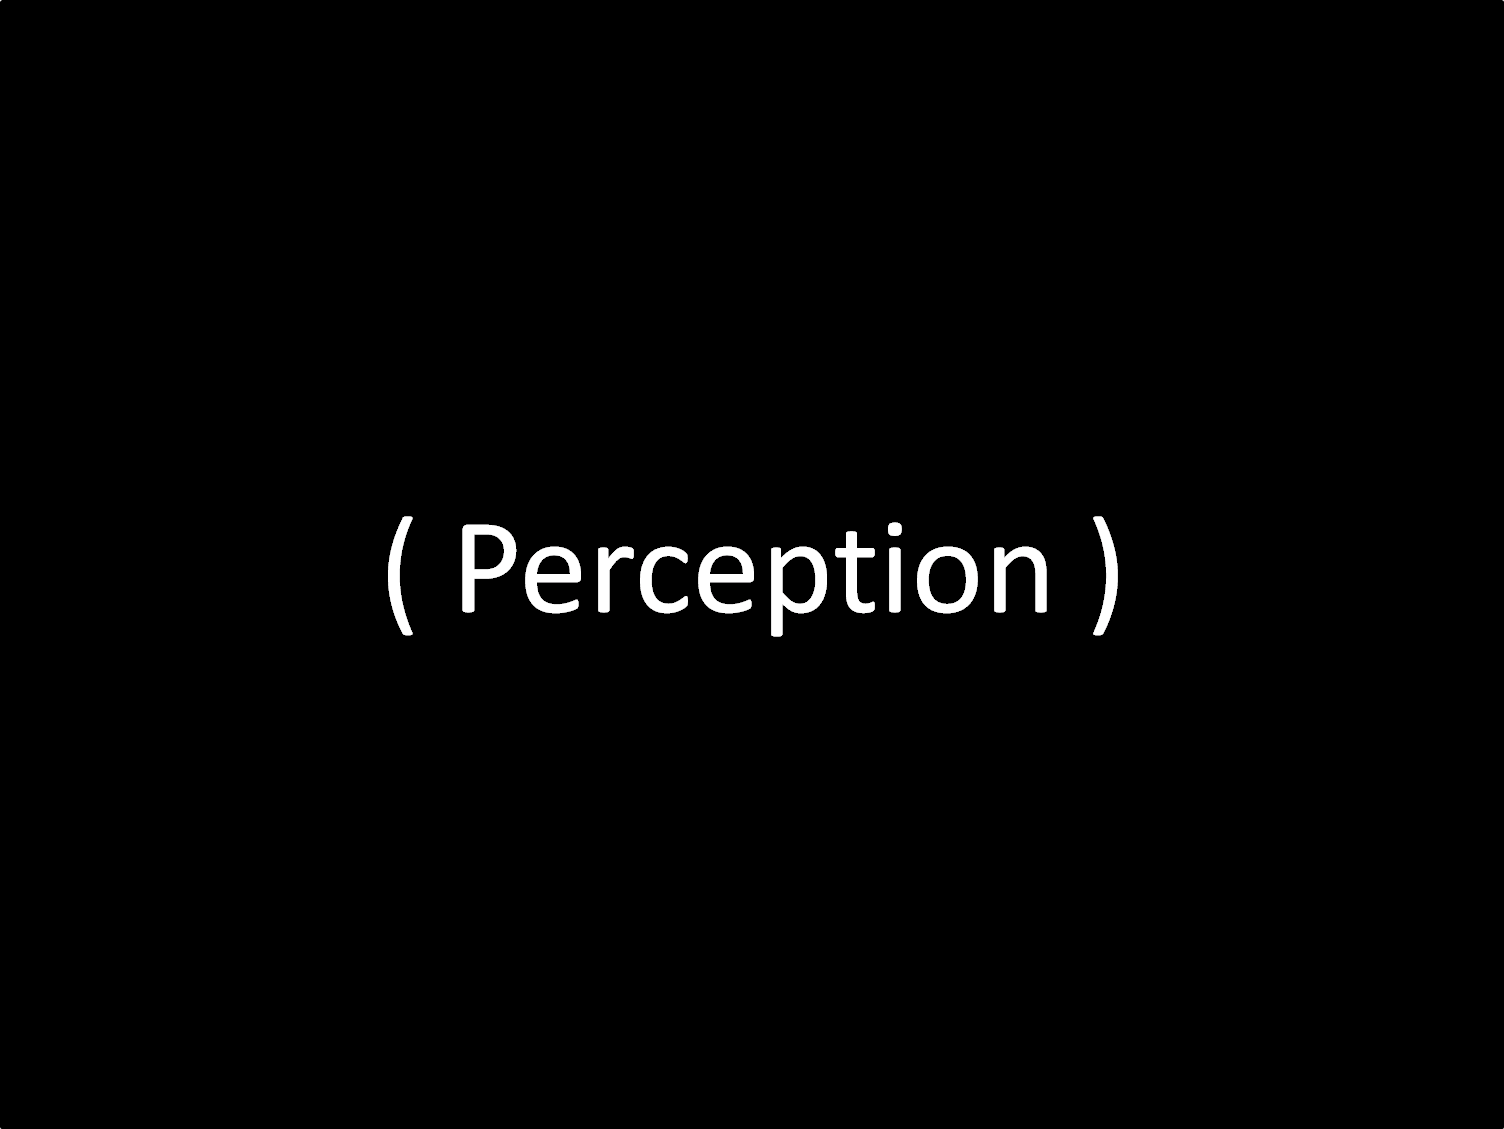 skewed perception definition